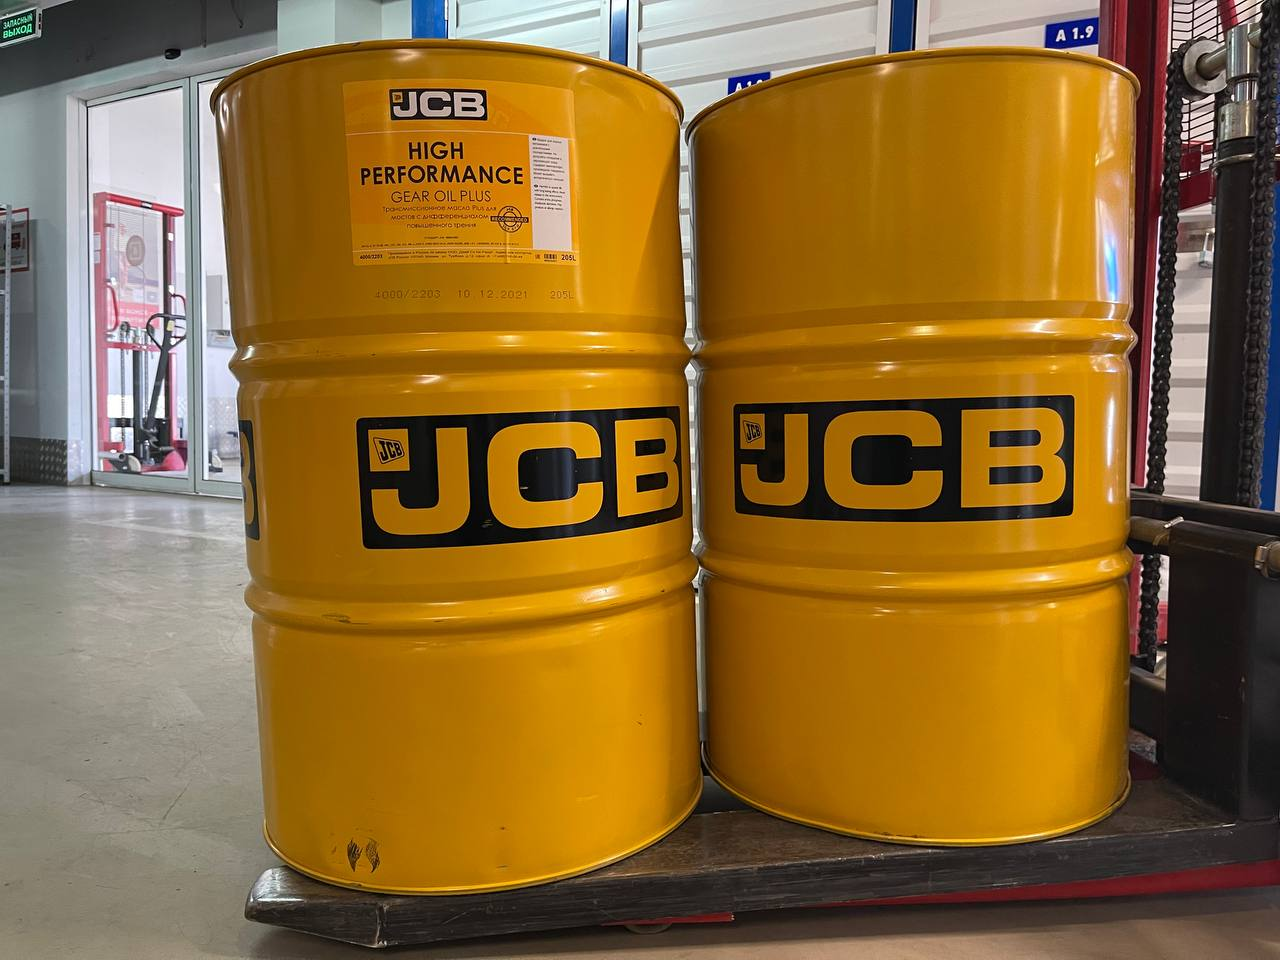 Jcb масло в мосты. Гидравлическое масло JCB hp32. Гидравлическое масло на JCB 3cx. Масло гидравлическое 32 JCB. Масло трансмиссионное для JCB 3cx.